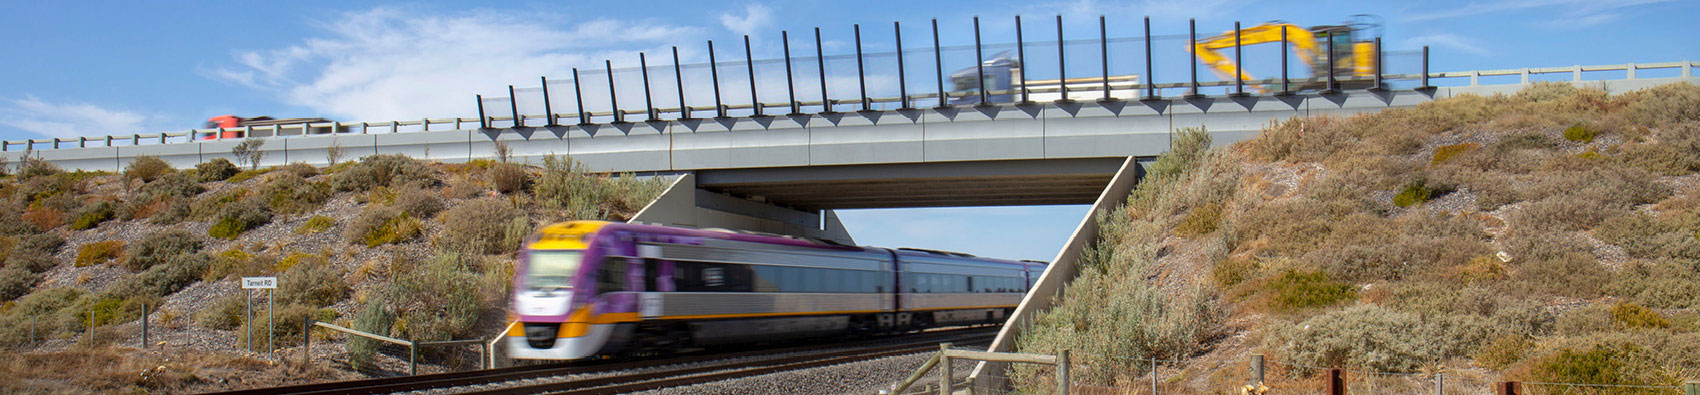 A V/Line train passing under a rail bridge